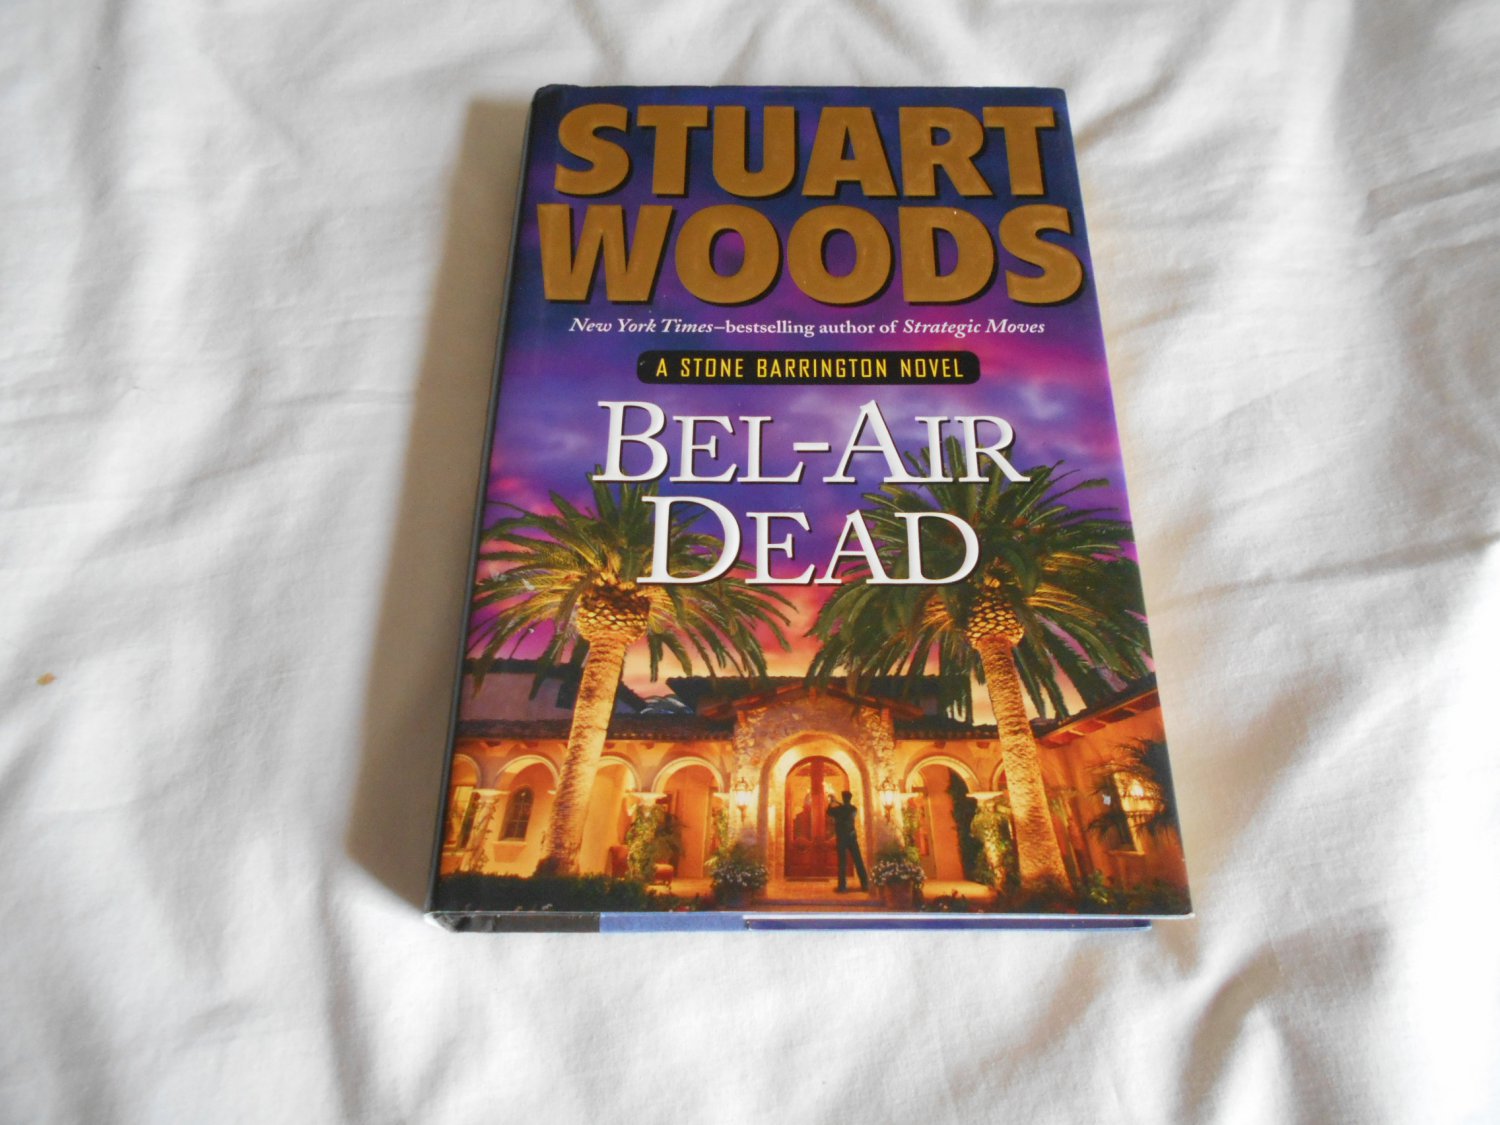 Bel-Air Dead by Stuart Woods (2011) (B15) Stone Barrington #20, Mystery, Detective